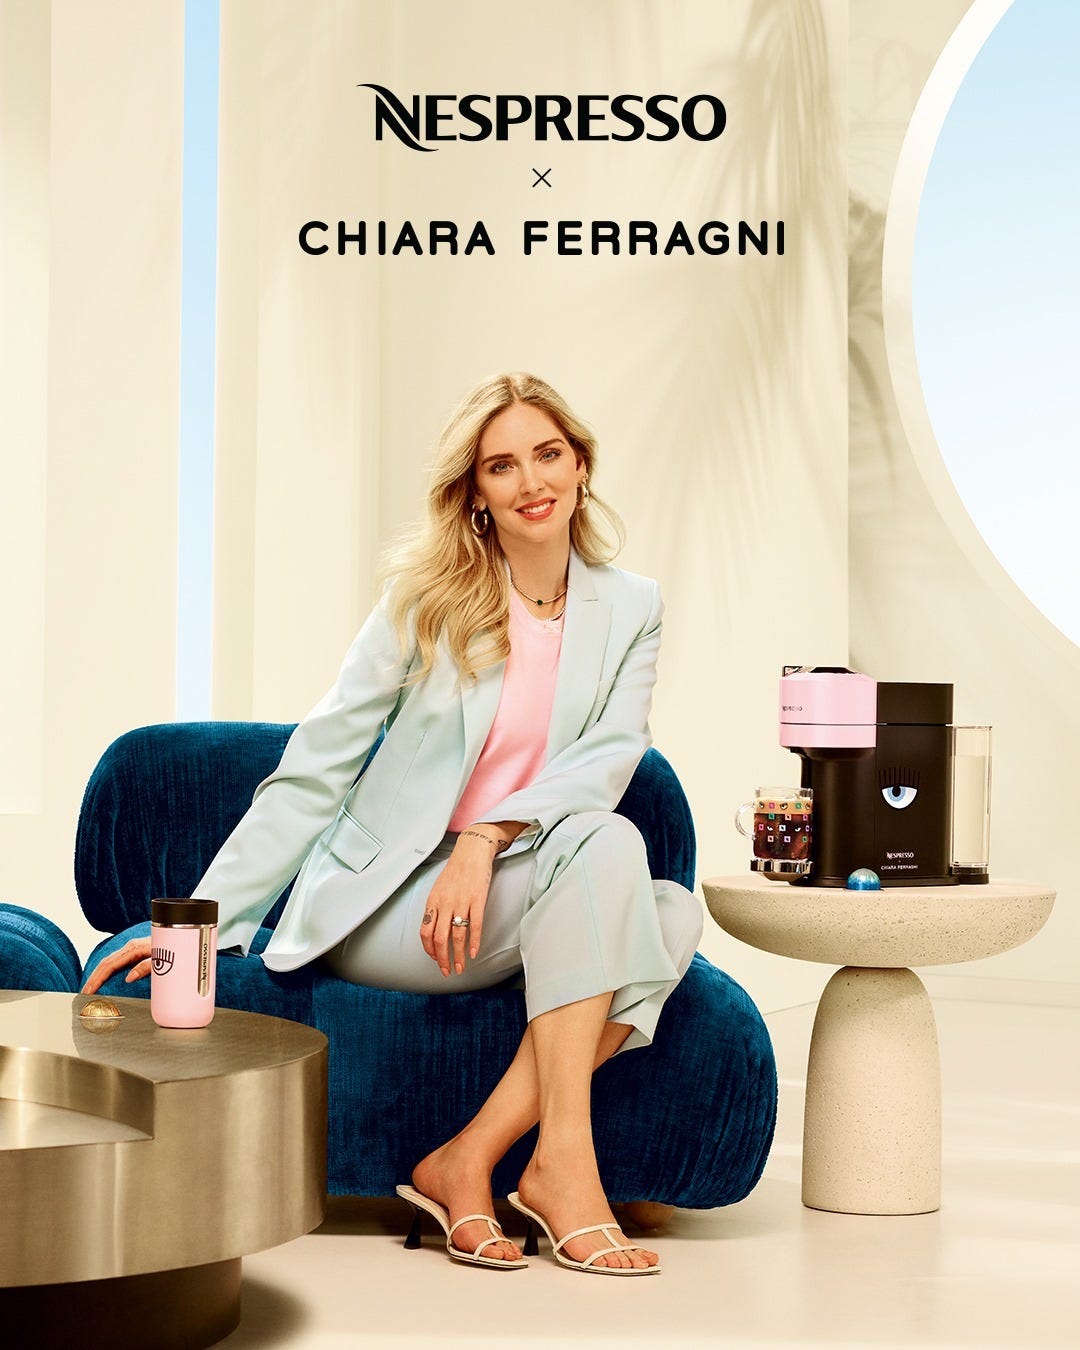 Nespresso x Chiara Ferragni: the Ykone campaign that redefines your summer  coffee | by Melinee Coret | ykone | Medium